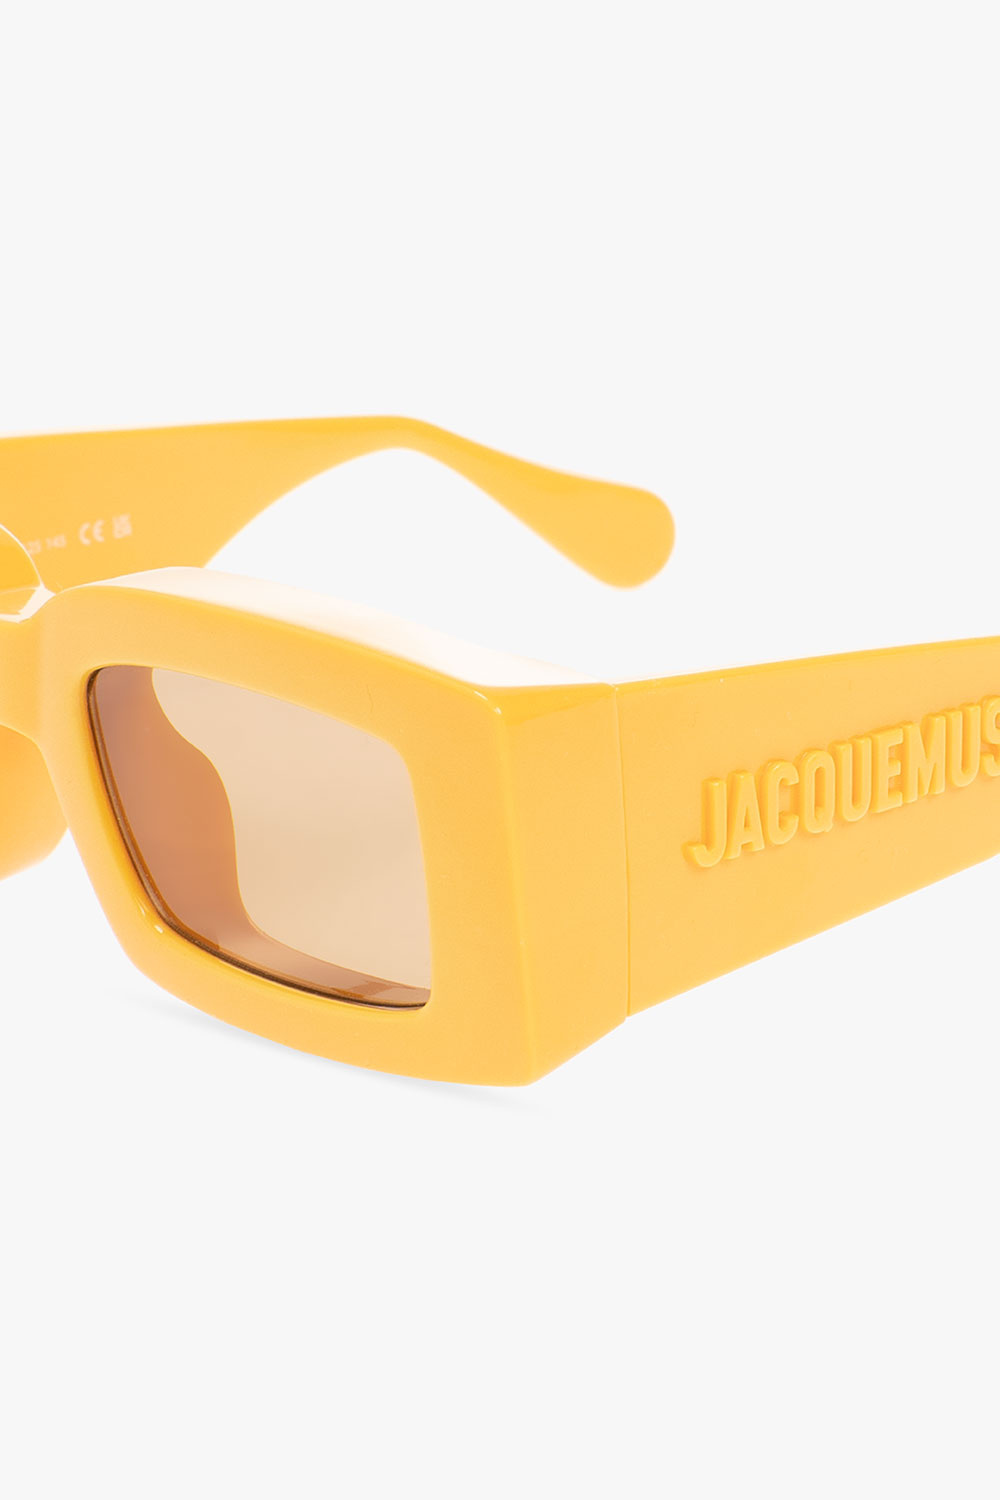 Jacquemus ‘Tupi’ sunglasses